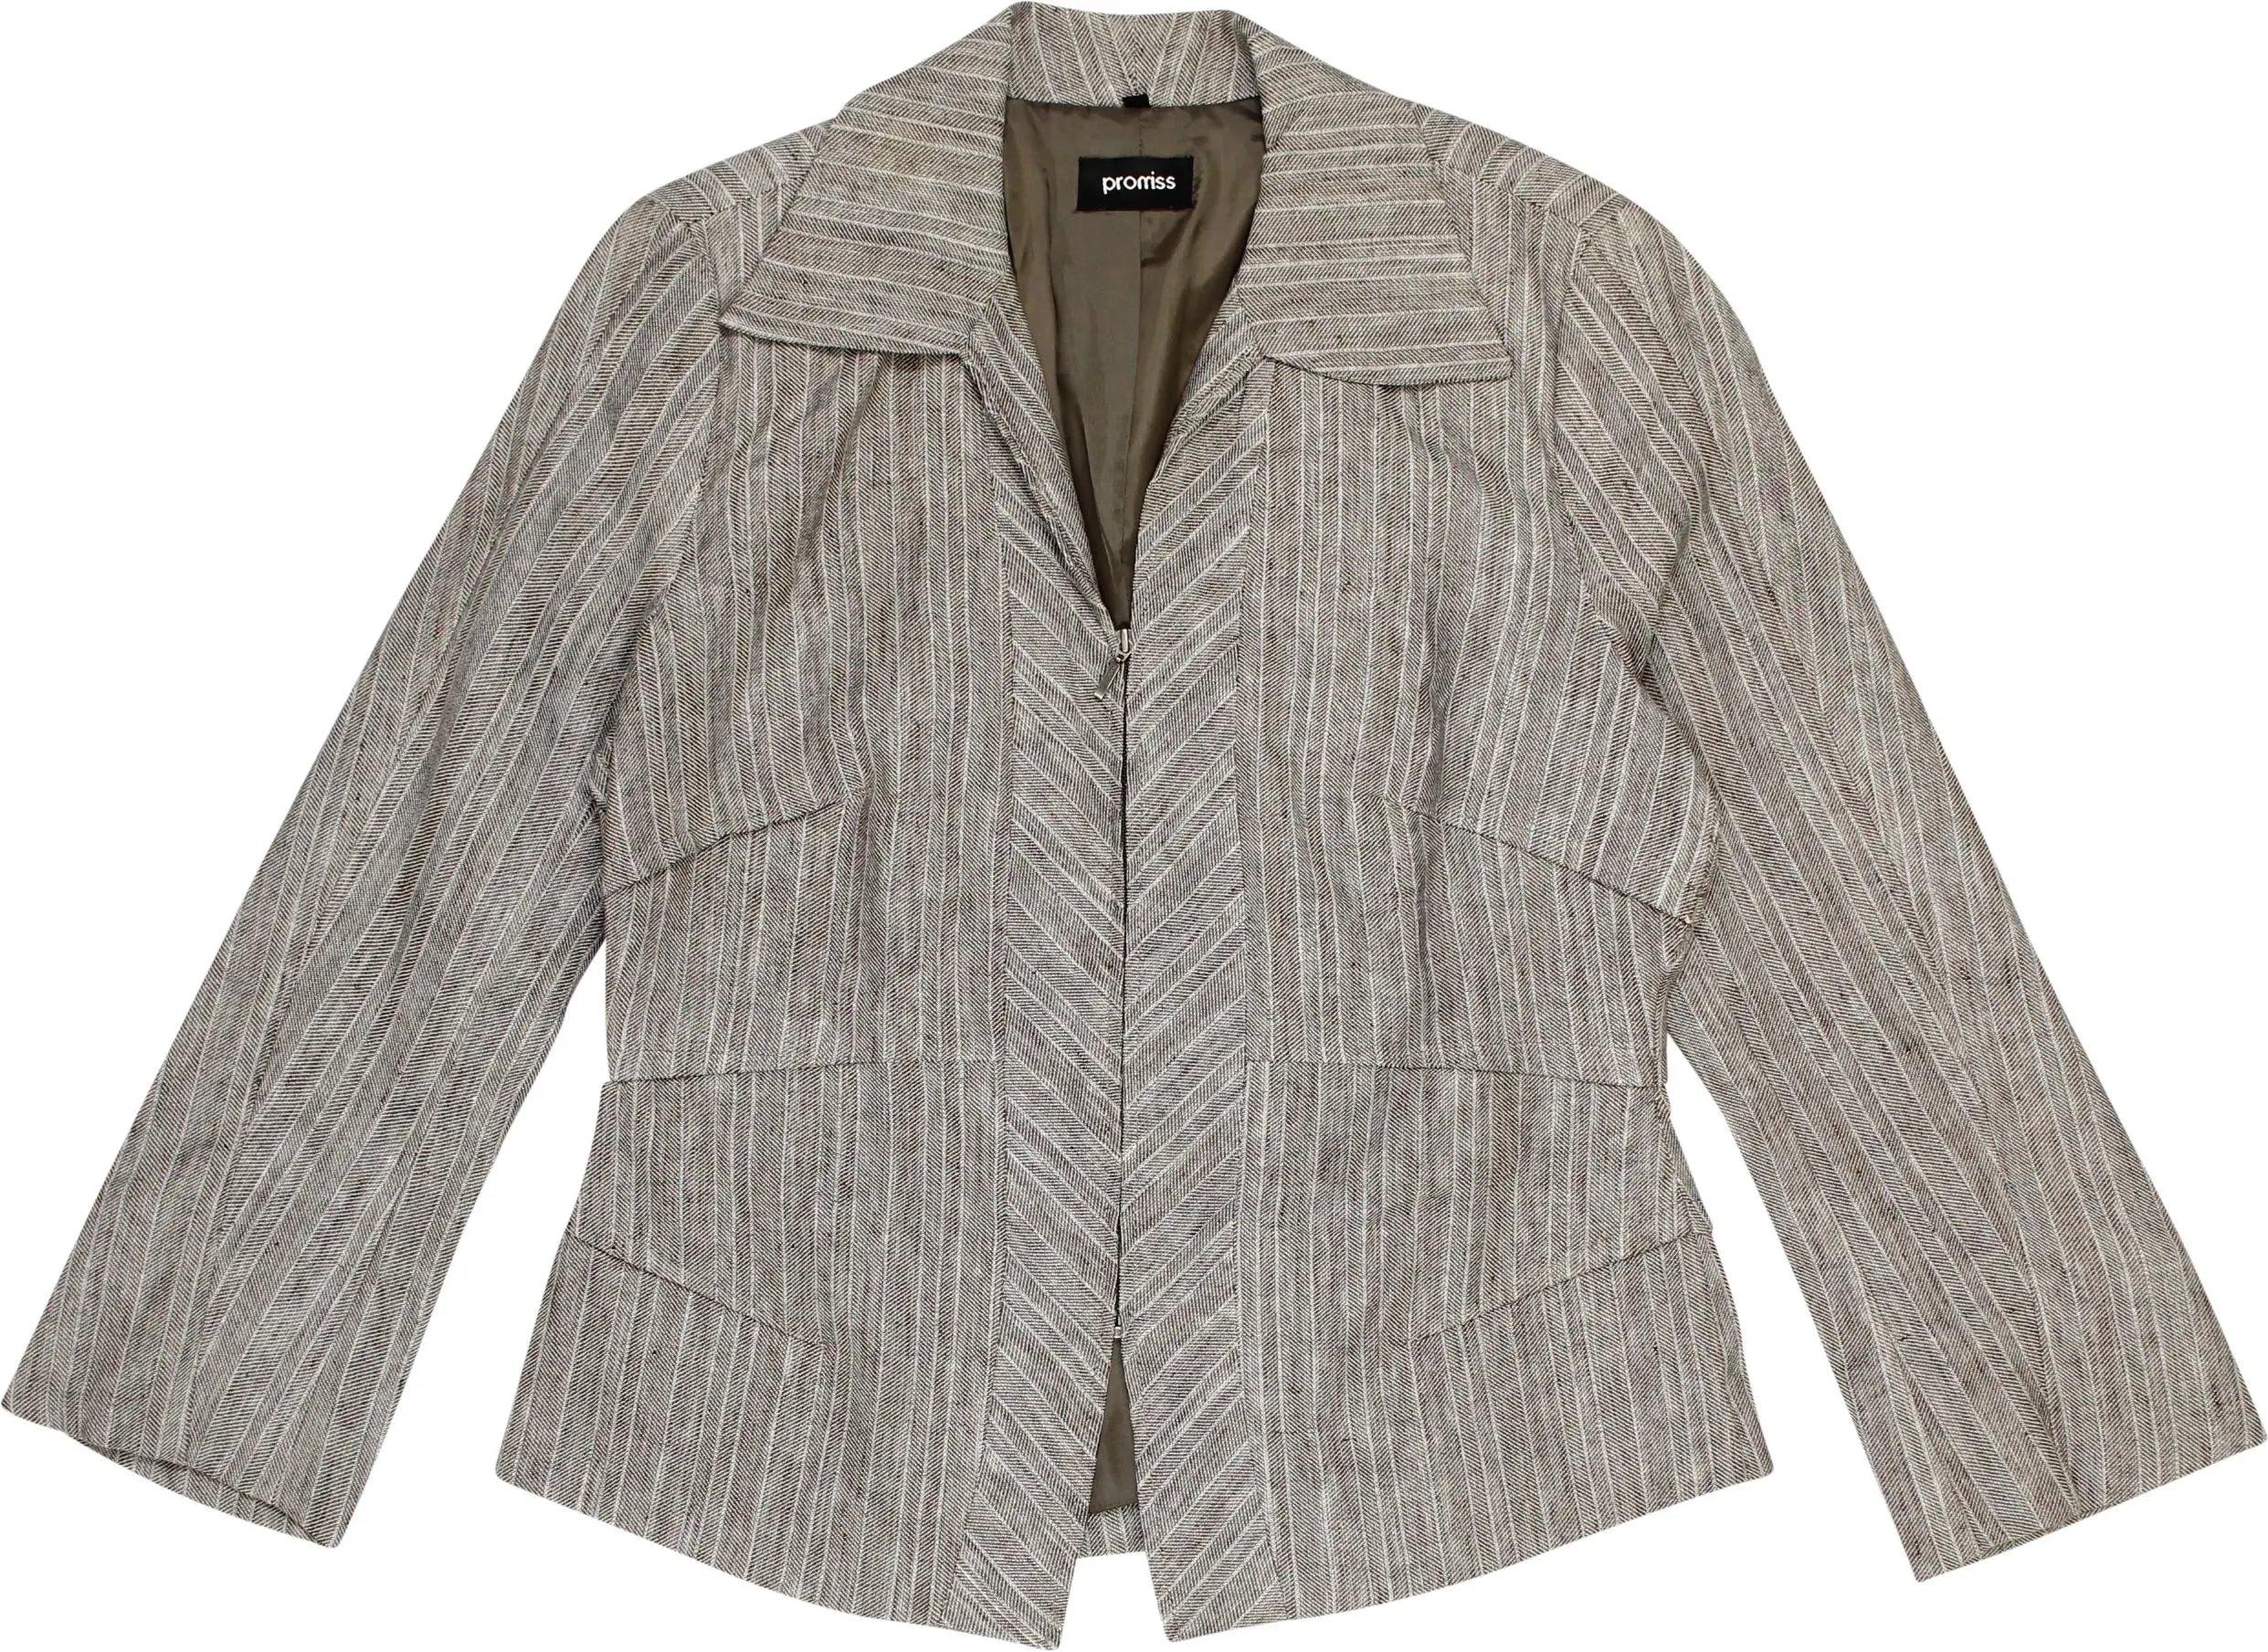 Promiss - Linen Blend Blazer- ThriftTale.com - Vintage and second handclothing